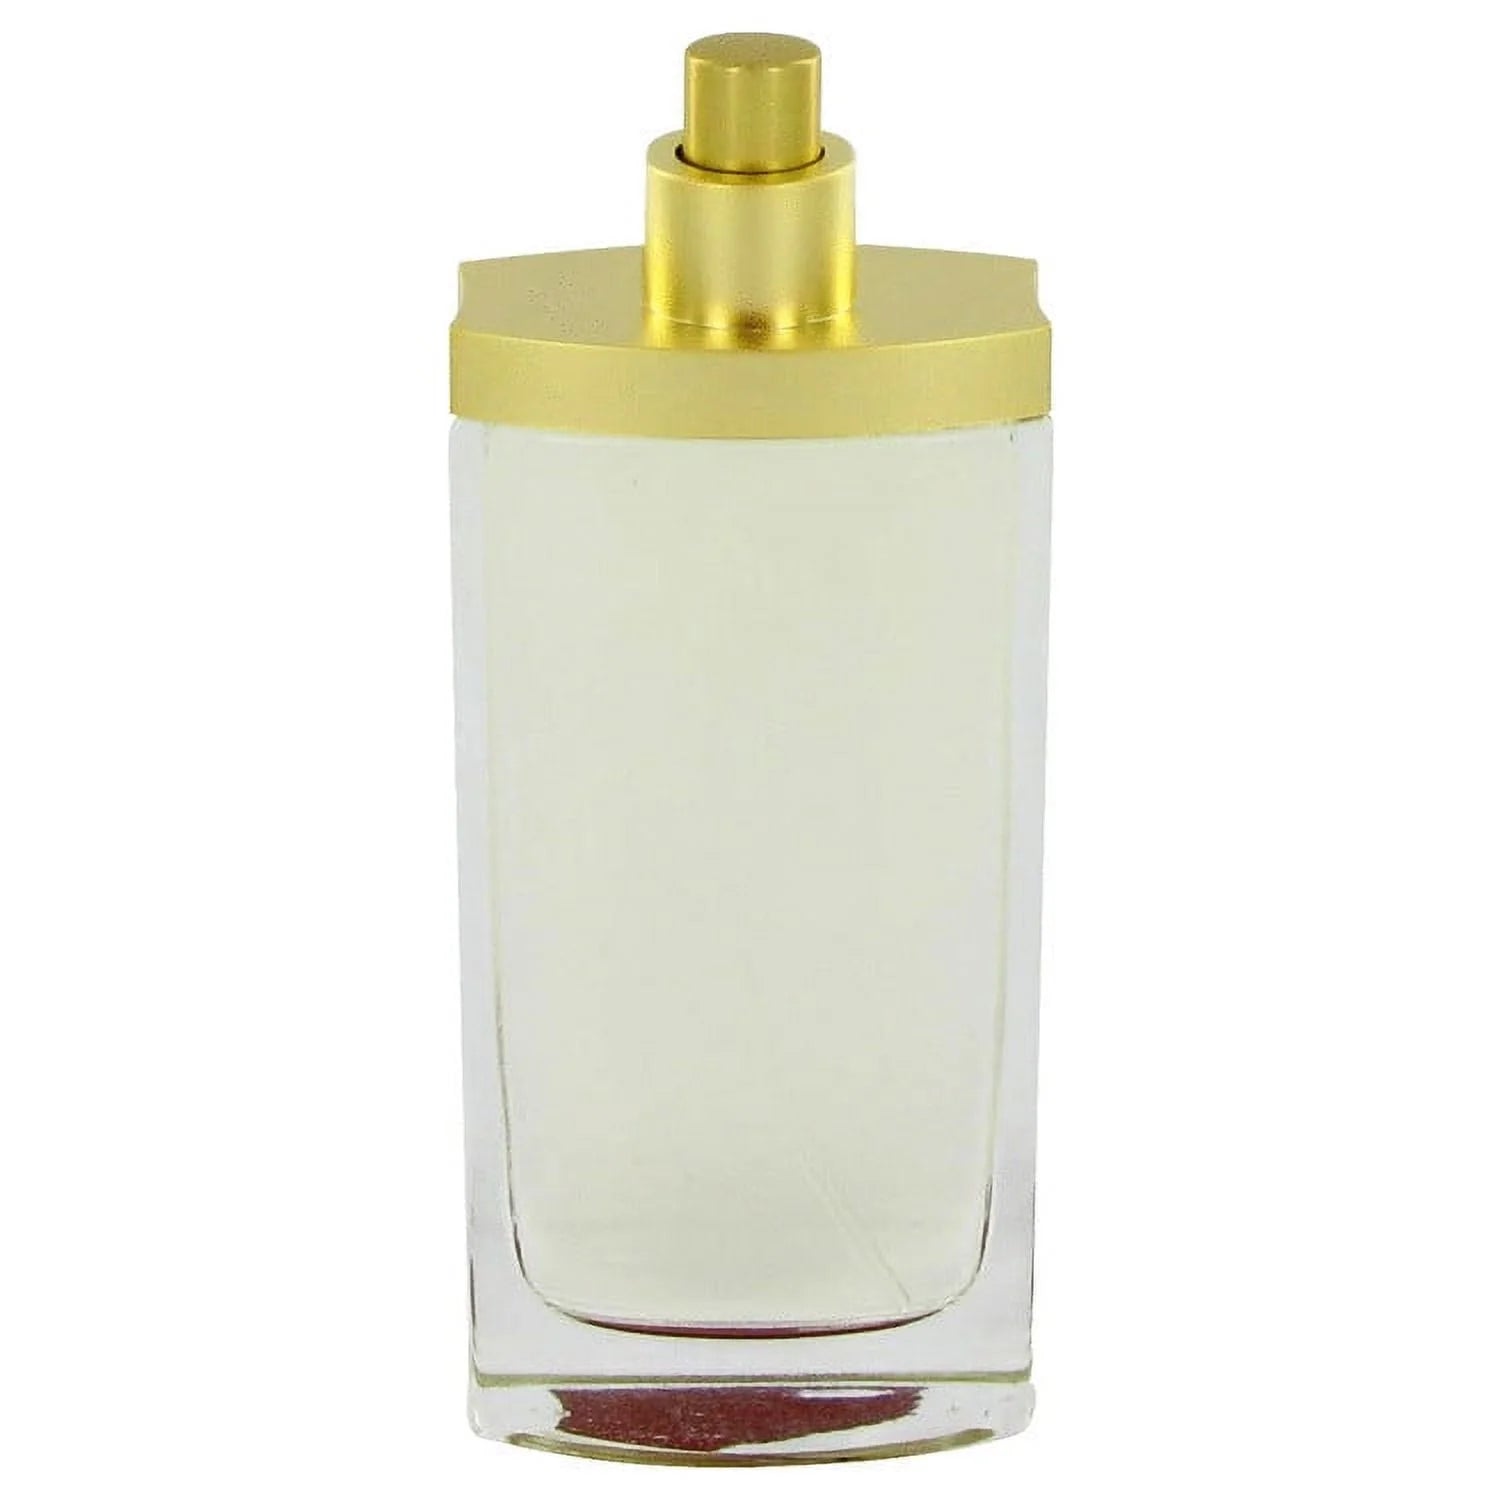 Jovan White Musk Parfum, Perfume for Women, 3.25 Oz